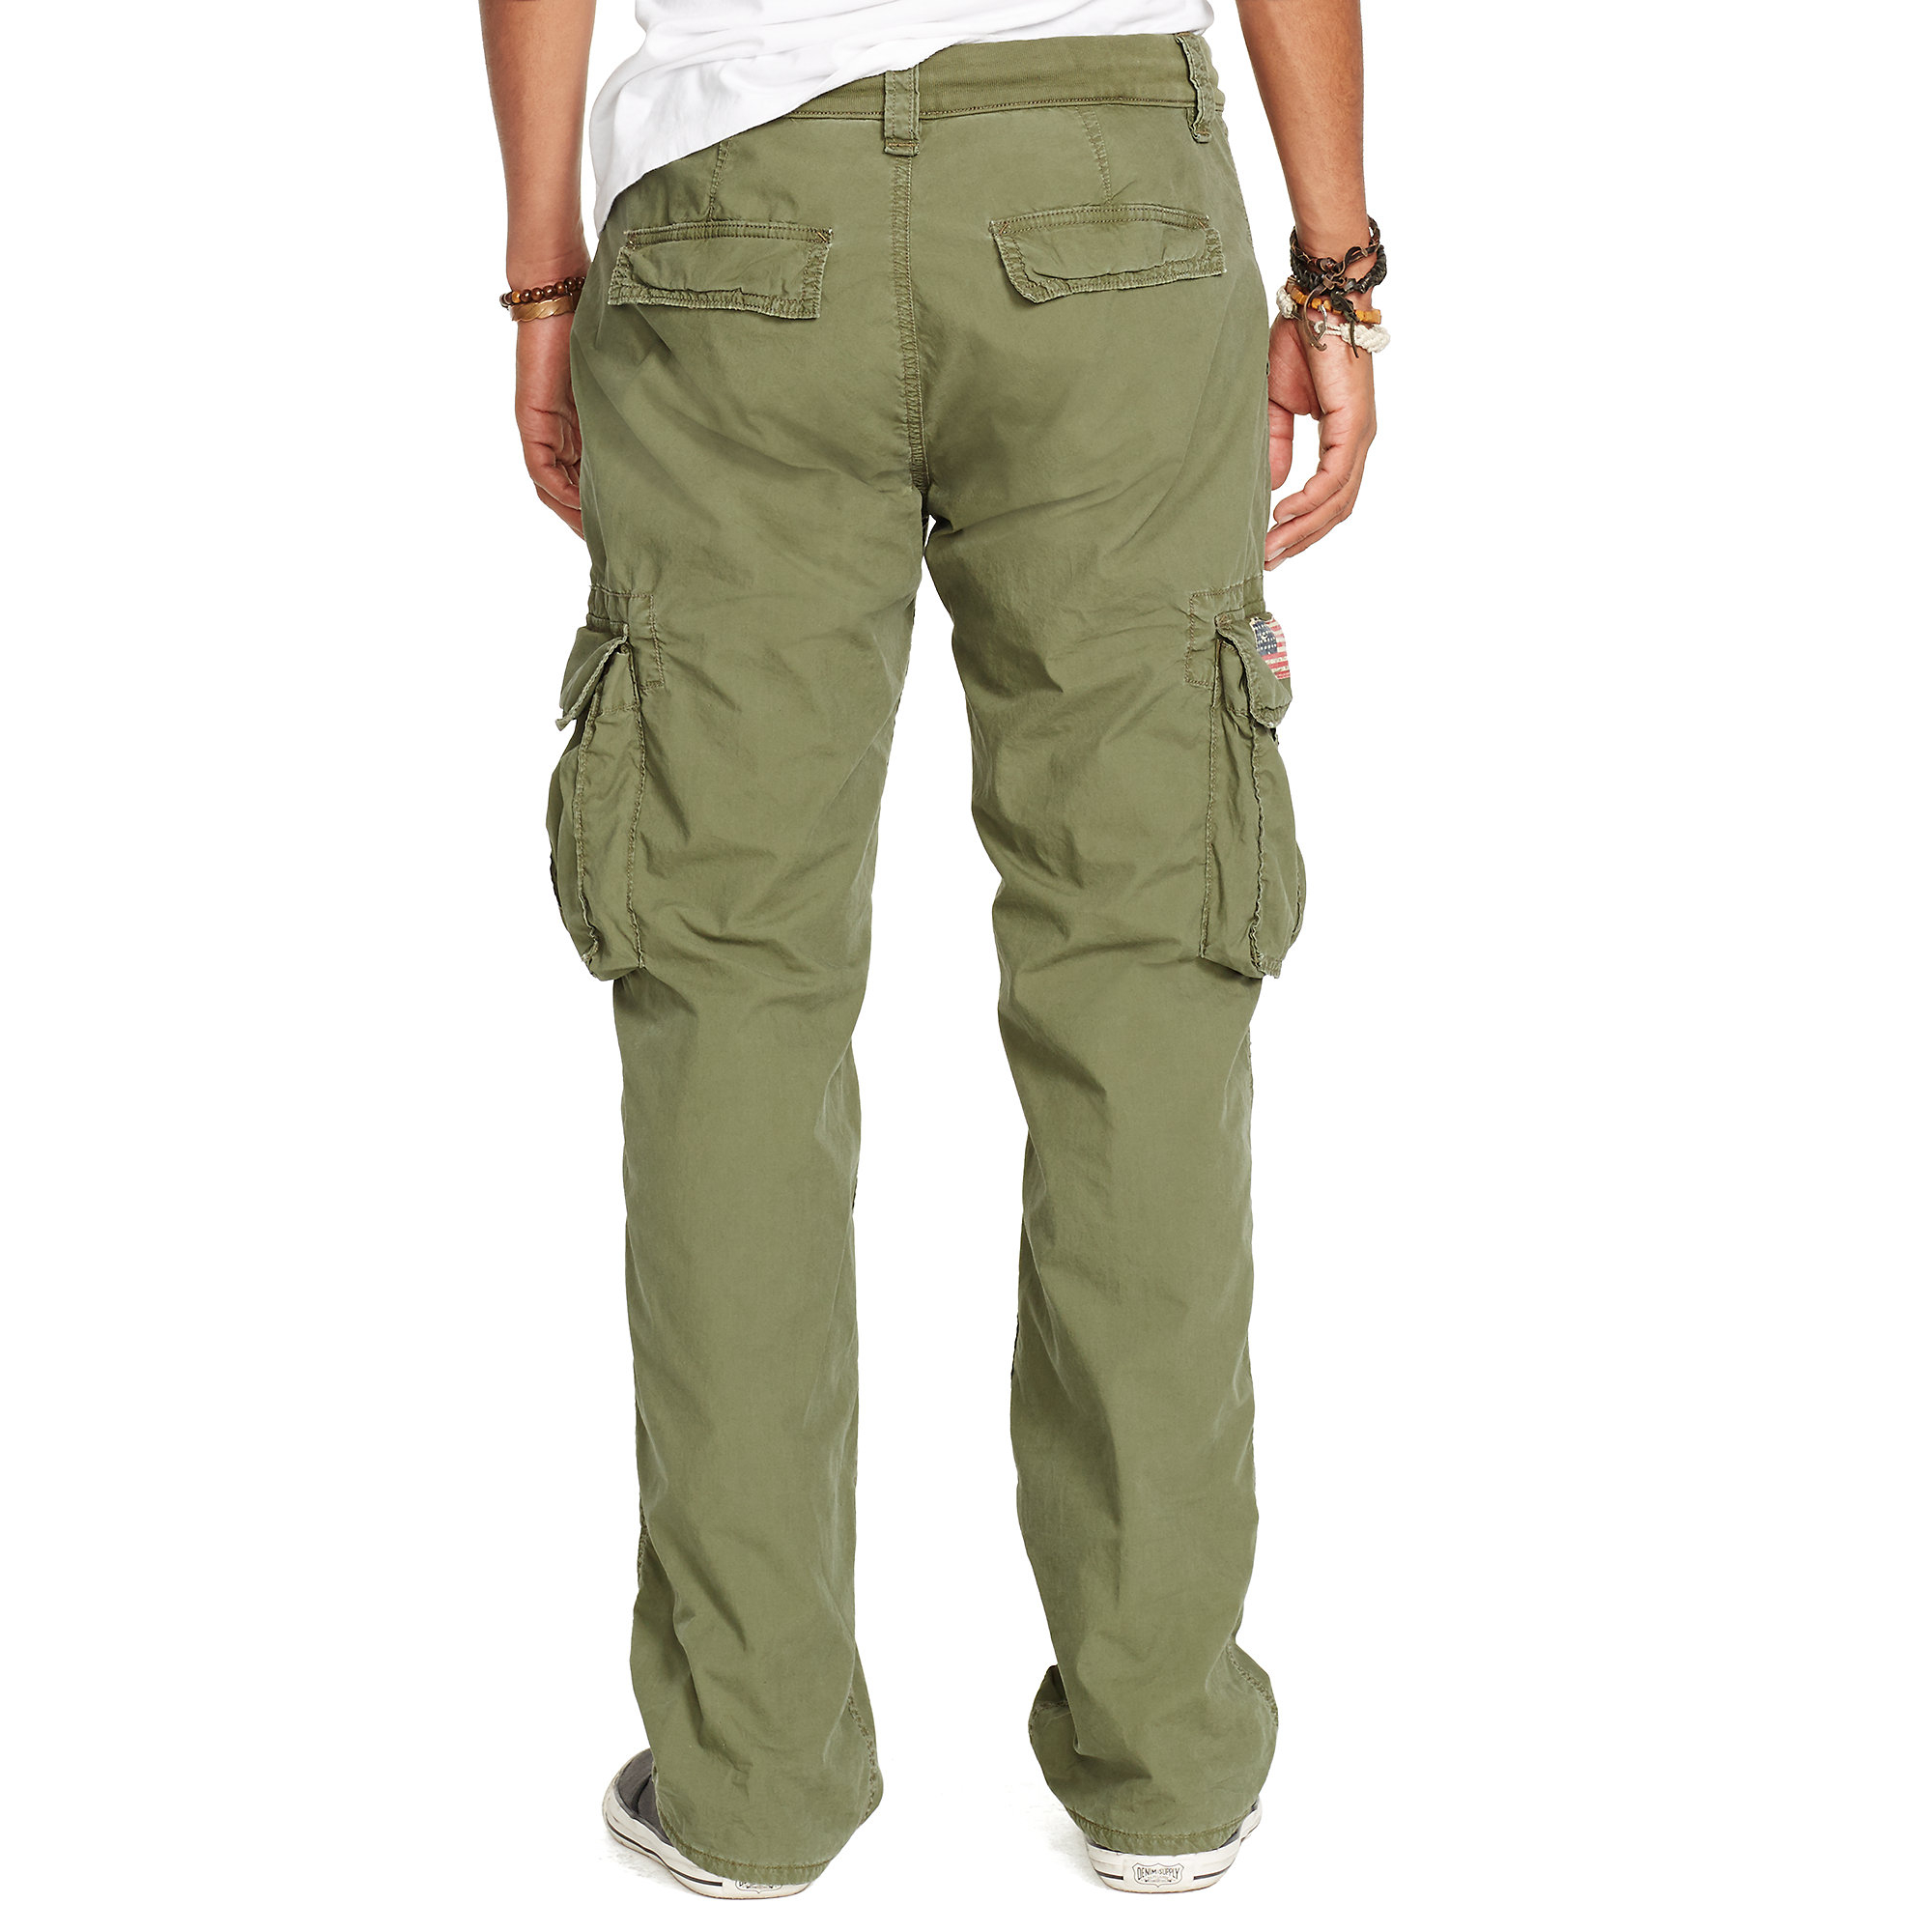 Lyst - Denim & Supply Ralph Lauren Jersey-Lined Cargo Pant in Green for Men